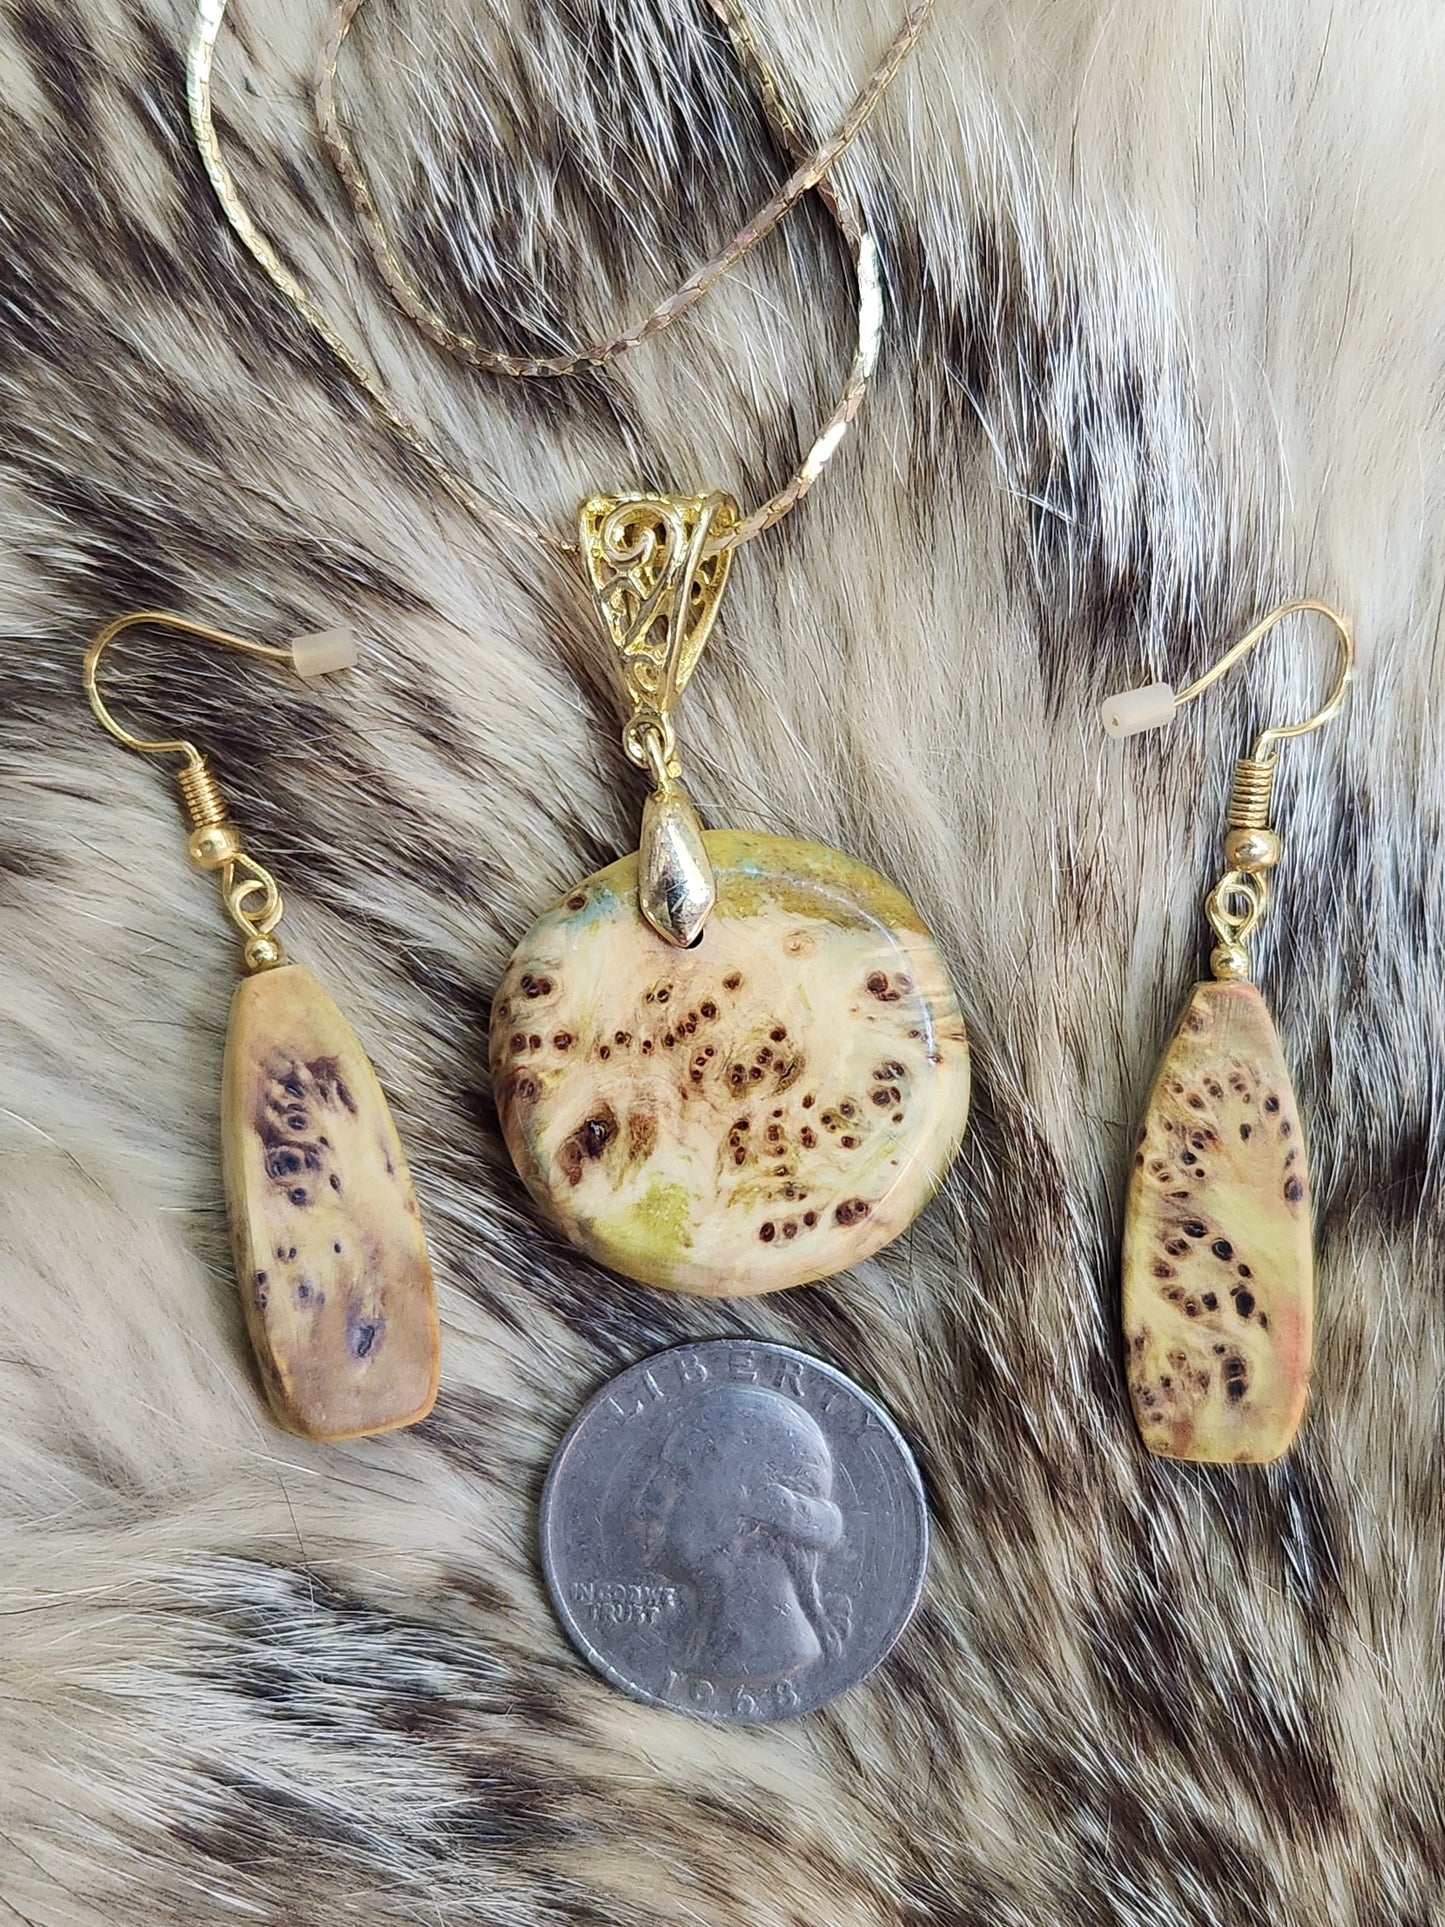 Yellow cedar burl wood earrings and neckless set